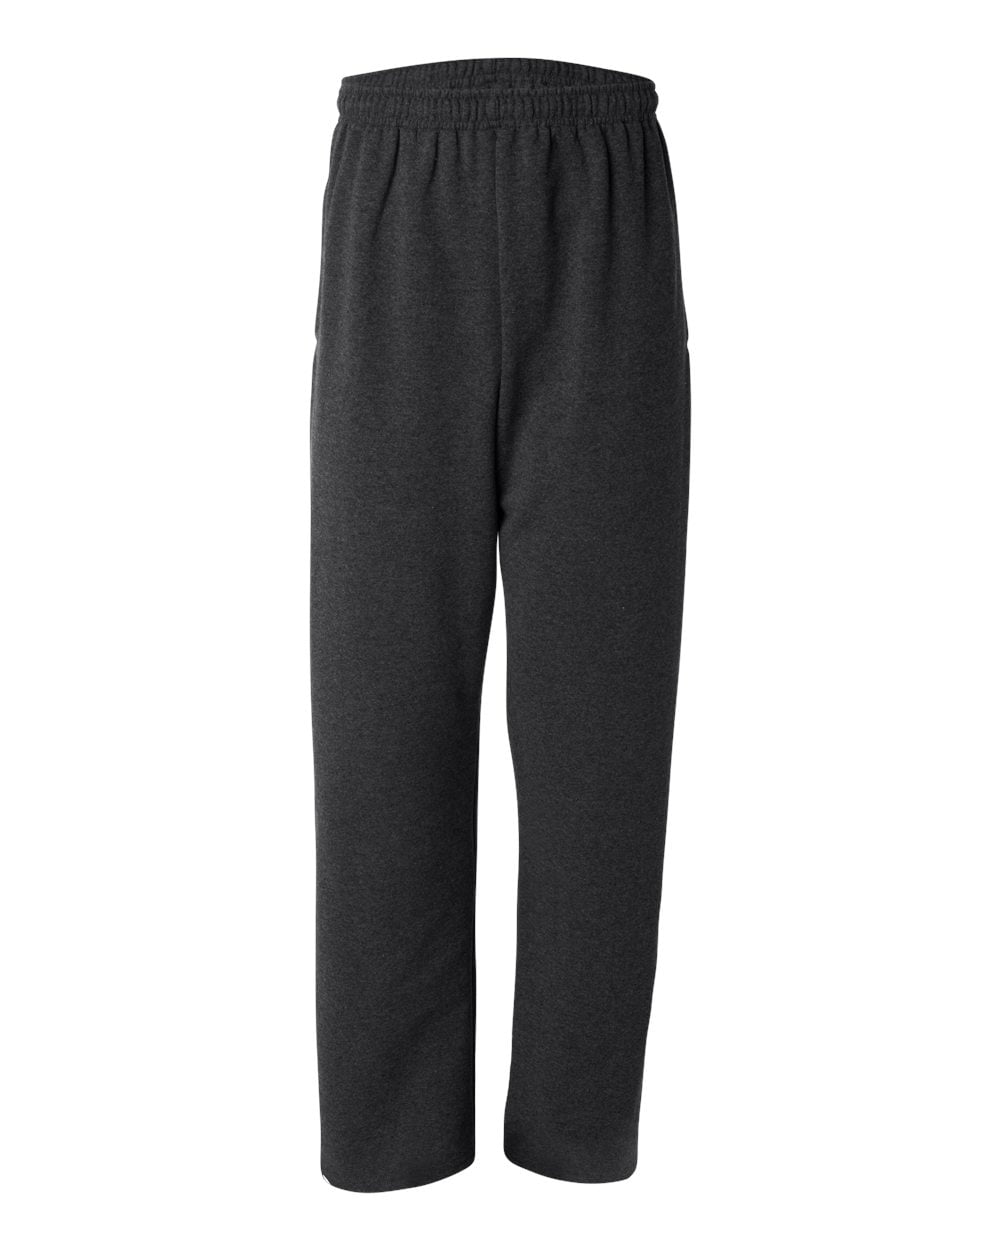 Jerzees Open Bottom Sweatpants with Pockets for Men - Walmart.com